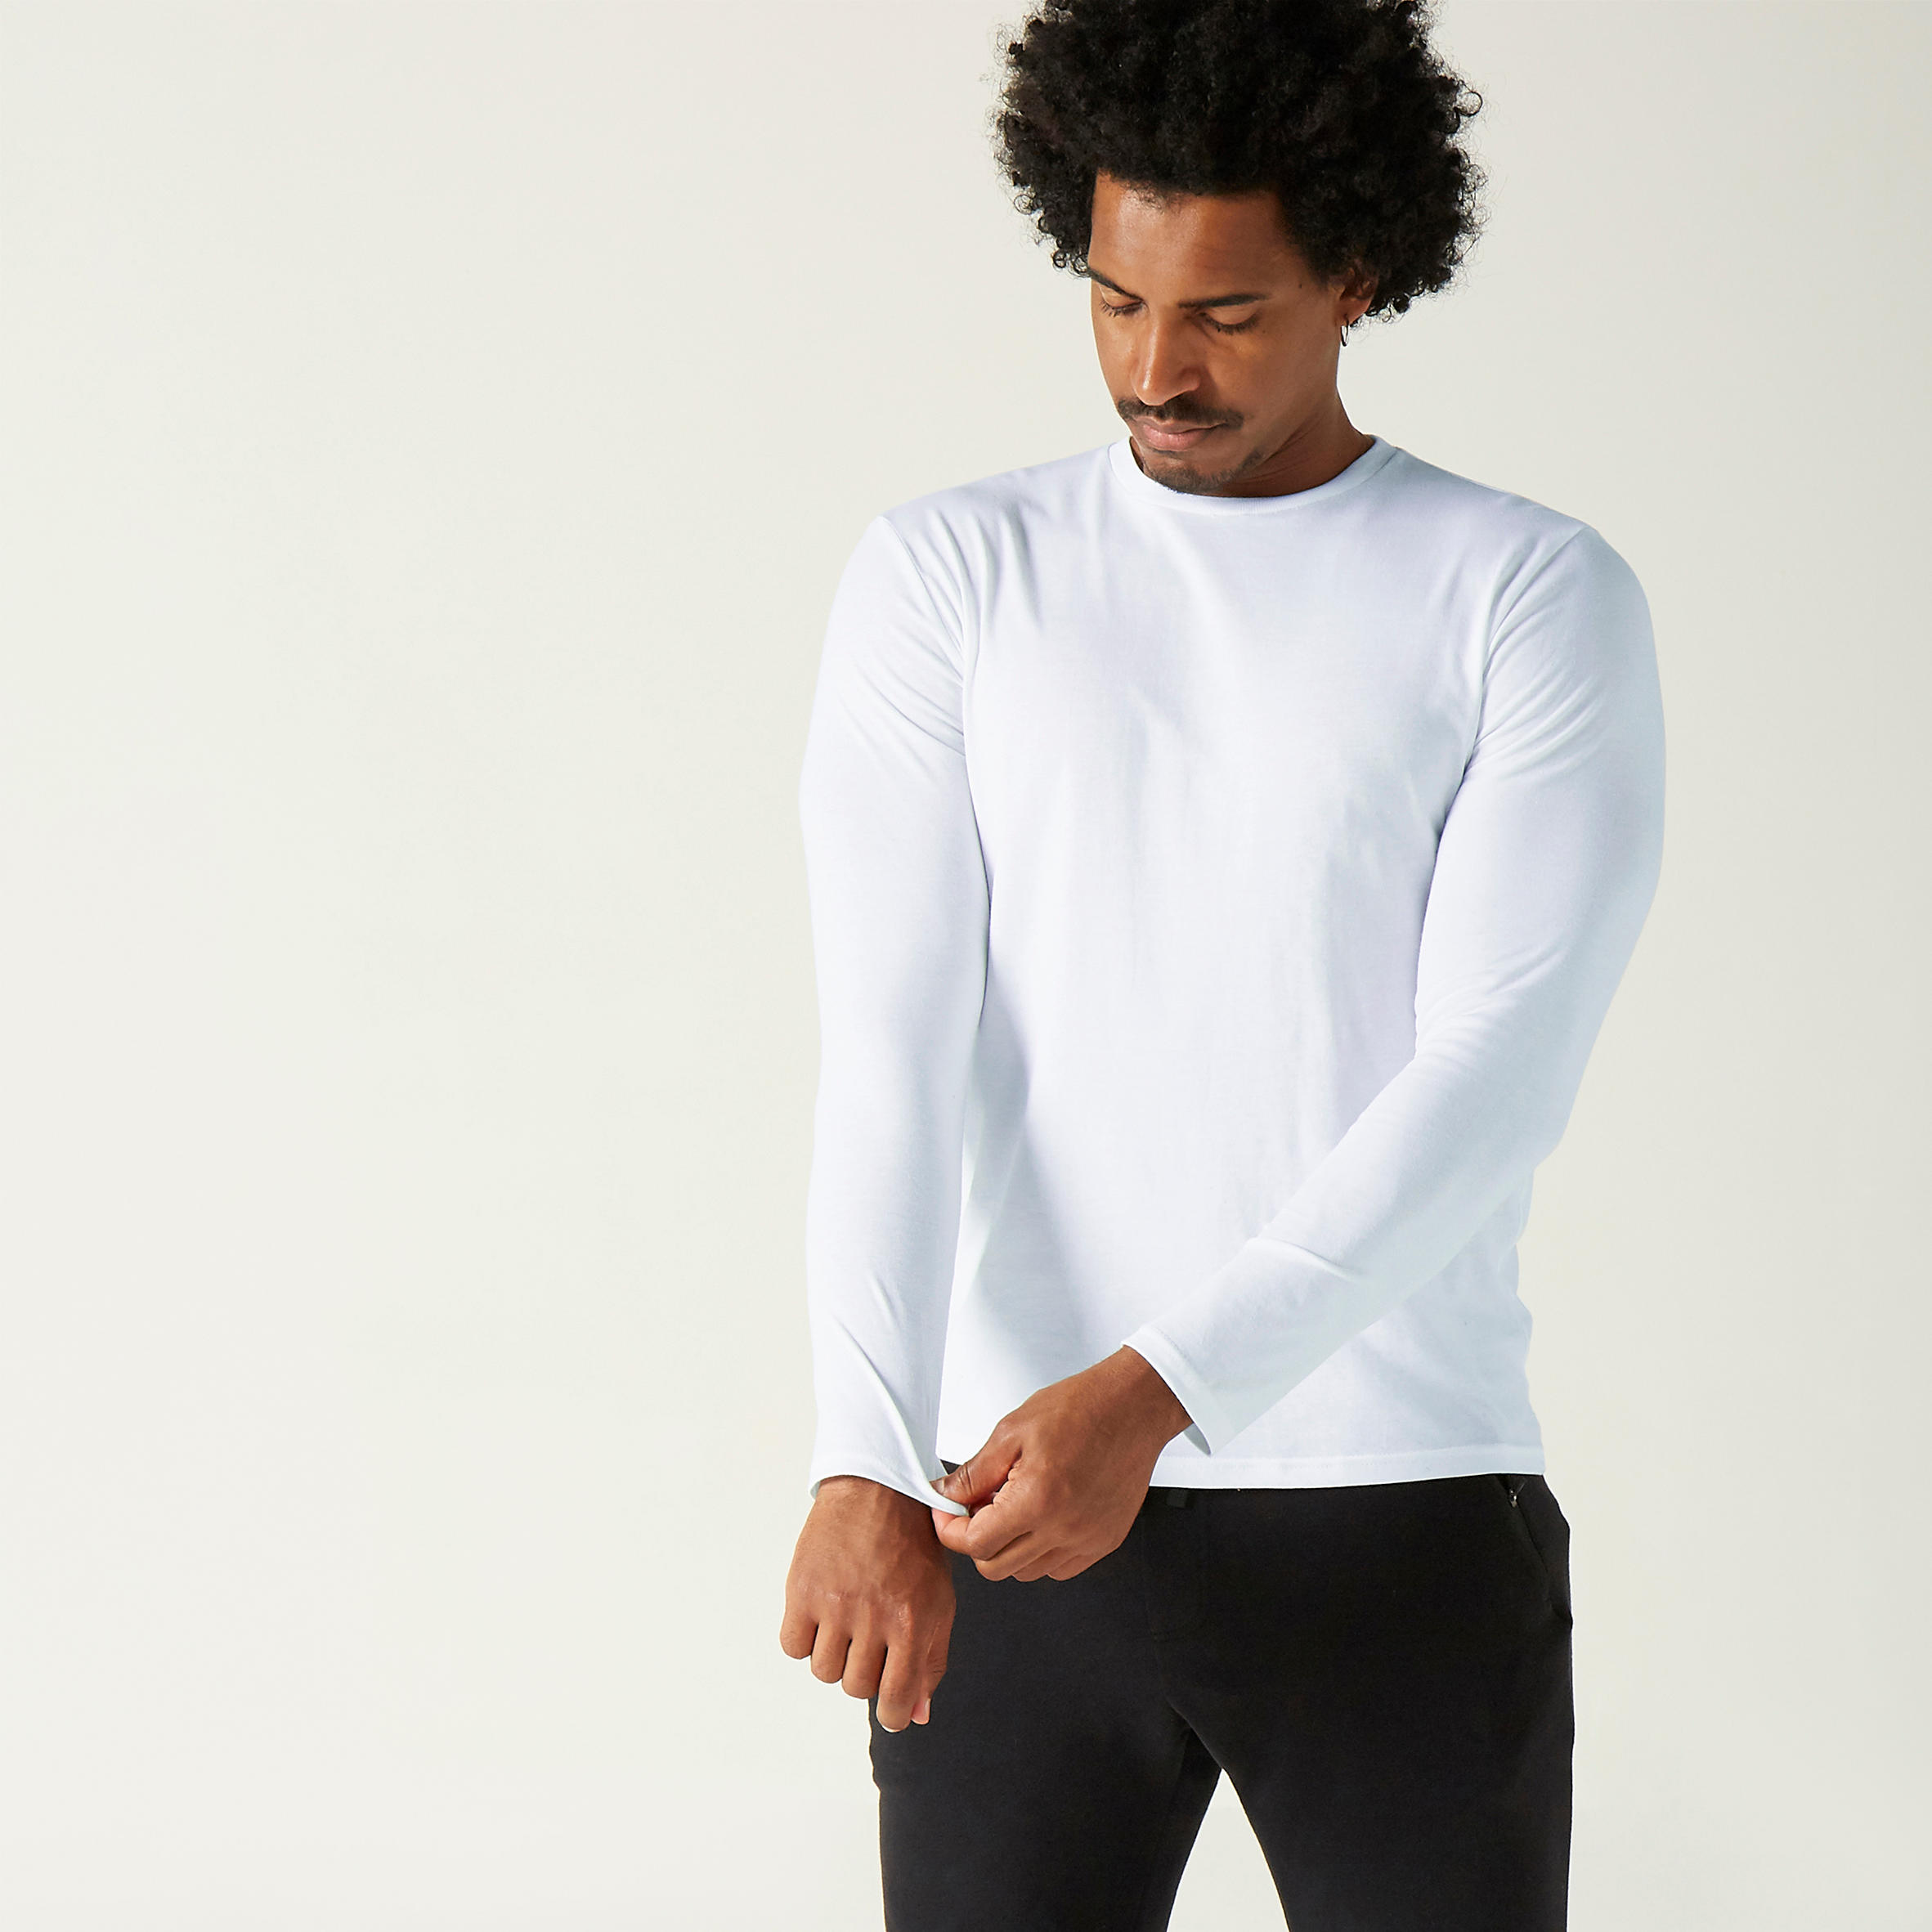 Men's Long-Sleeved Straight-Cut Crew Neck Cotton Fitness T-Shirt 100 - Glacier White 2/5